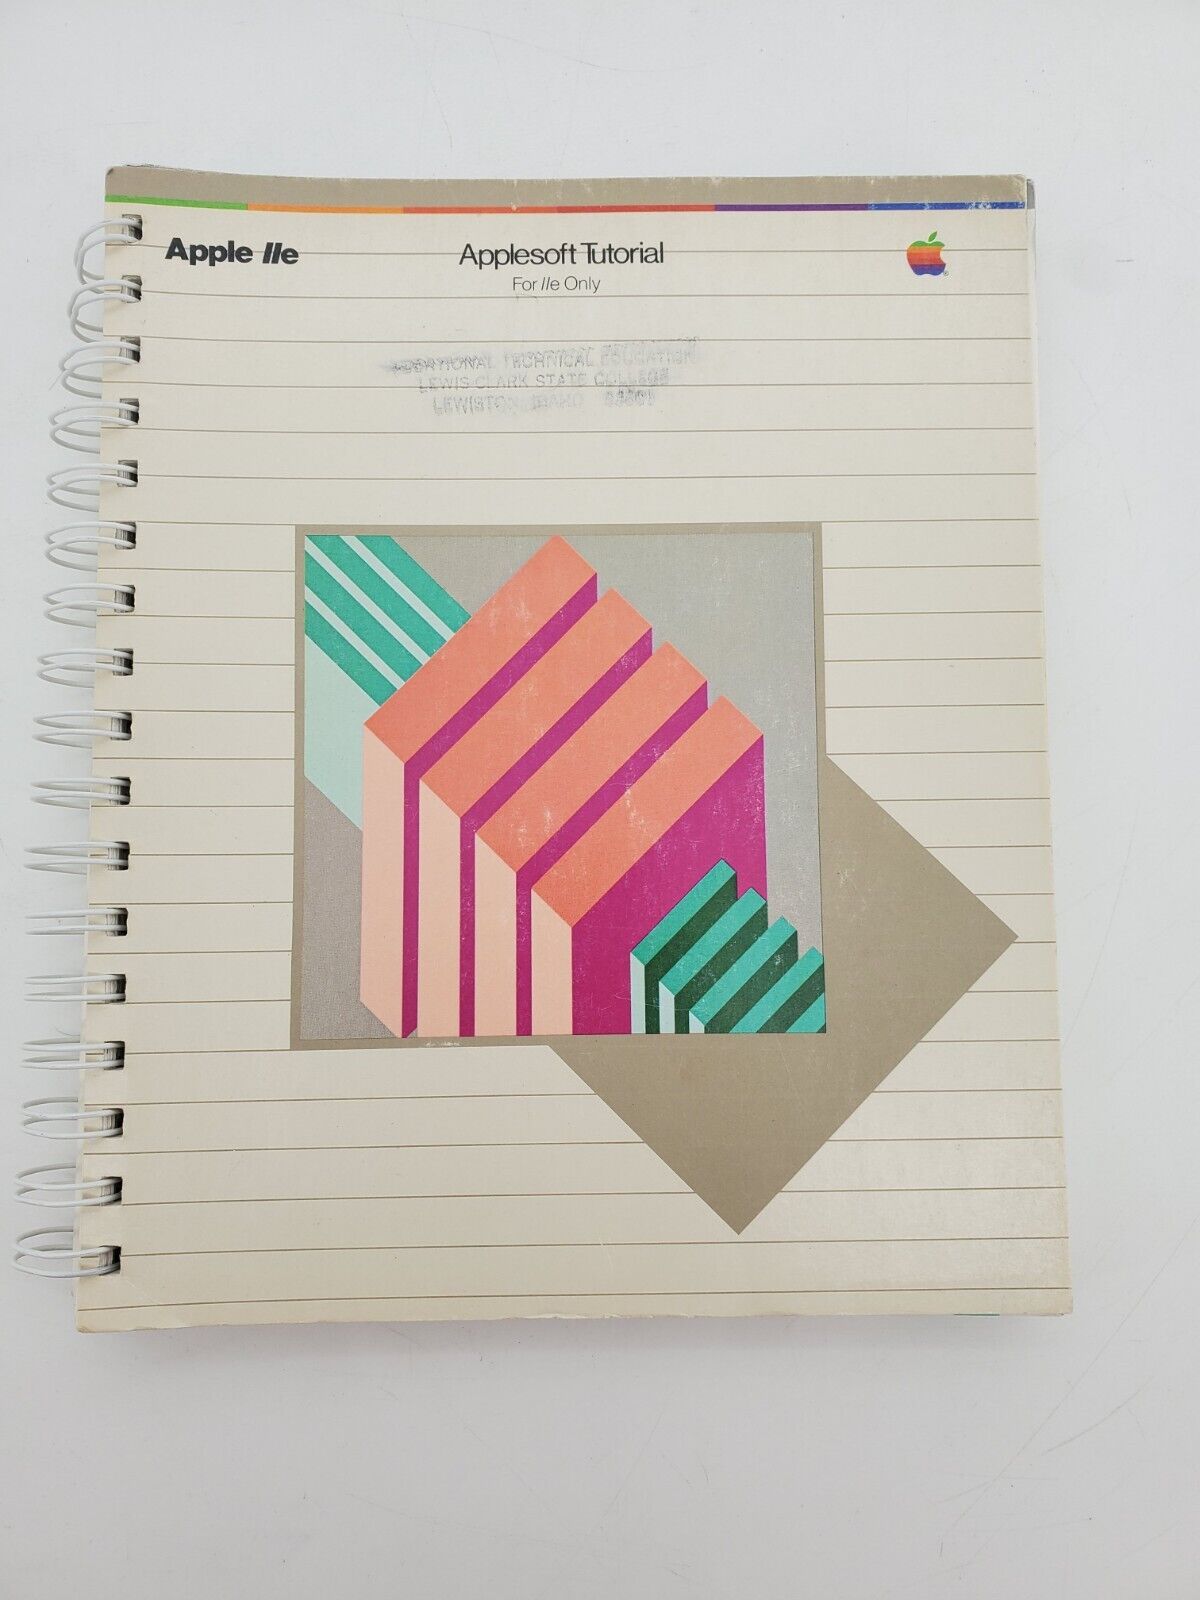 Vintage 1982 Apple II Applesoft Tutorial For IIe Only Guide P/N: 030-0358-A